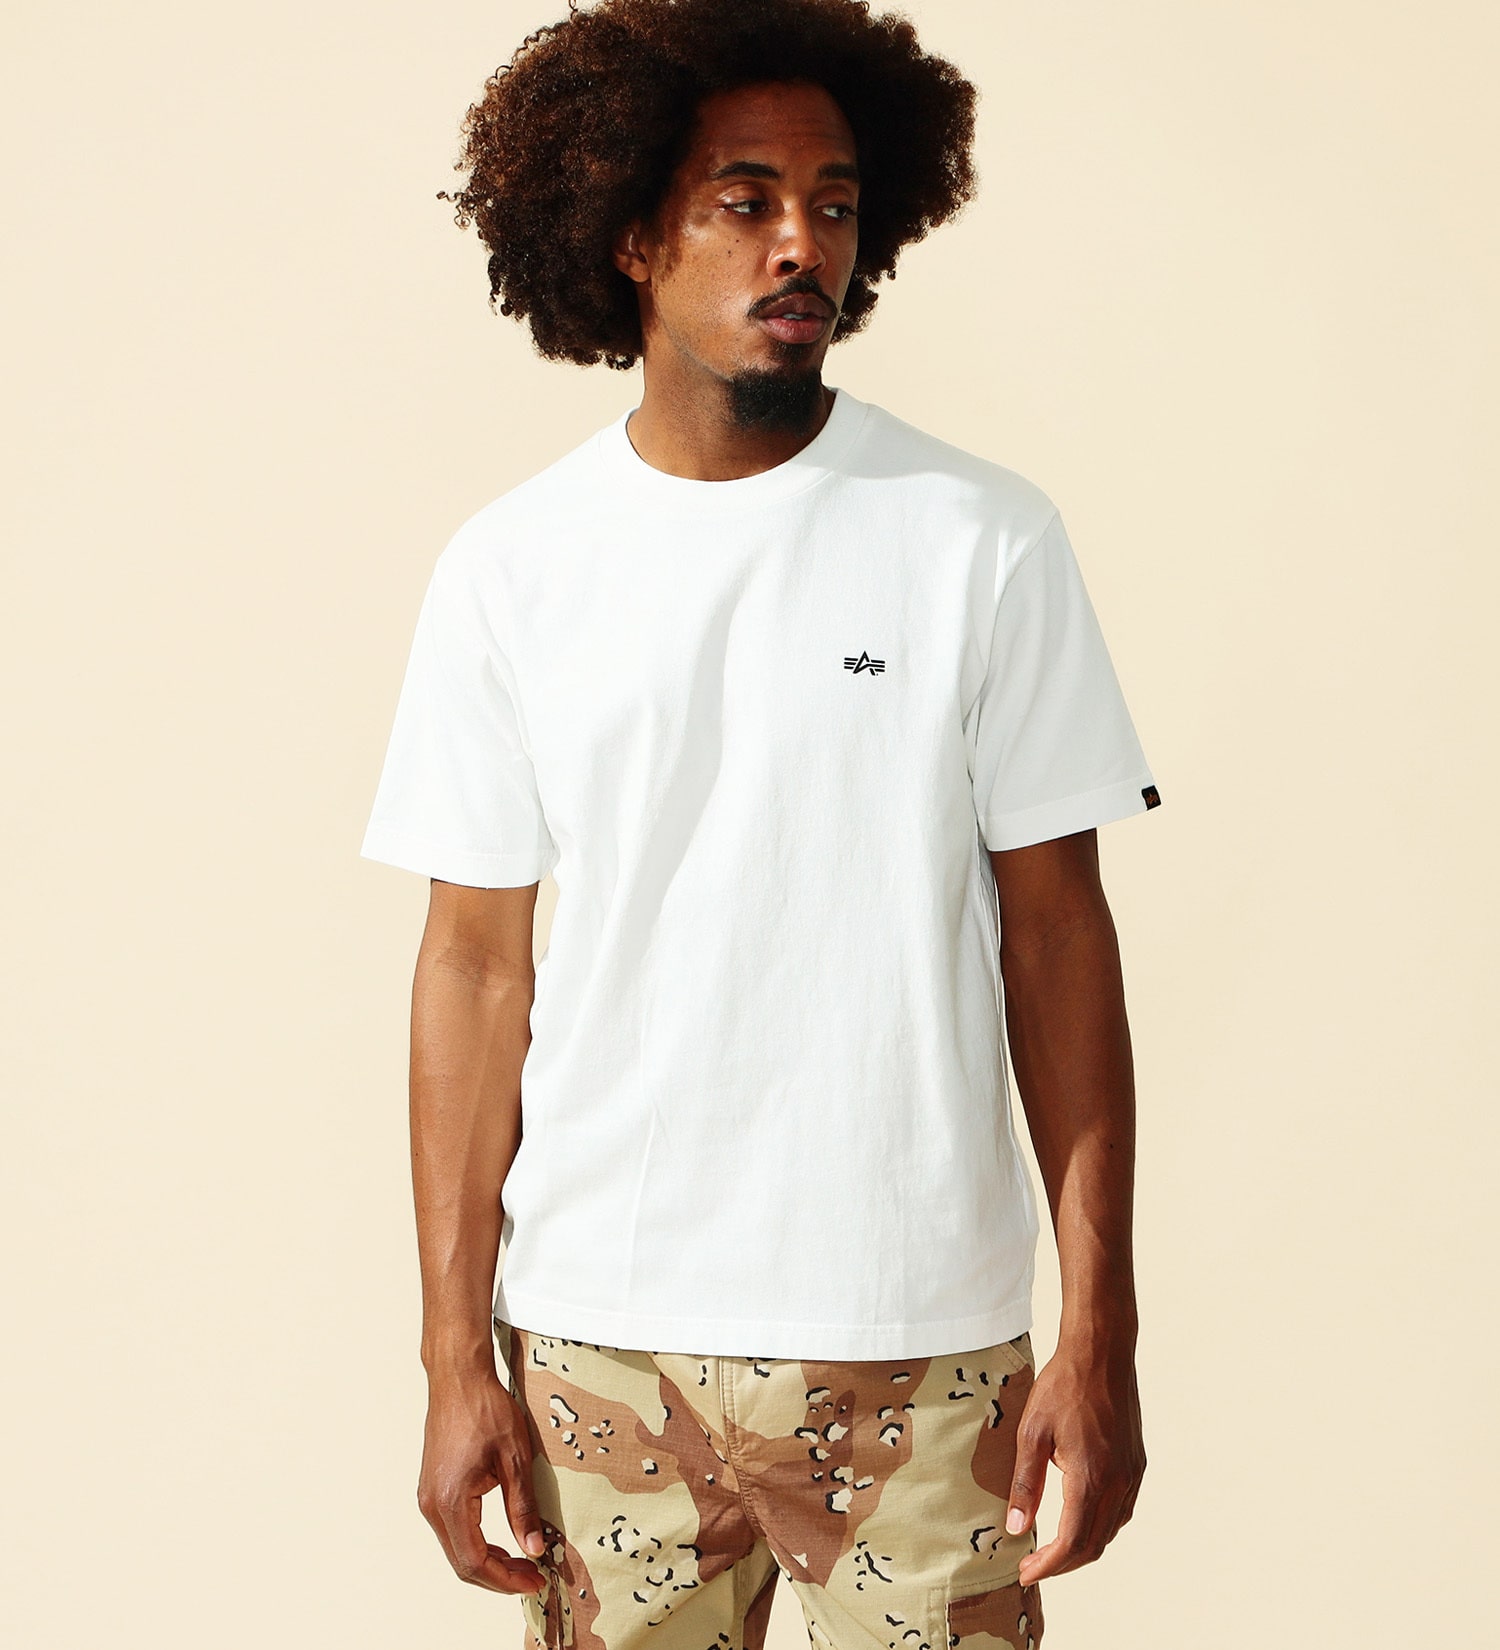 ALPHA(アルファ)のDRESSCODE バックプリントTシャツ 半袖|トップス/Tシャツ/カットソー/メンズ|ホワイト